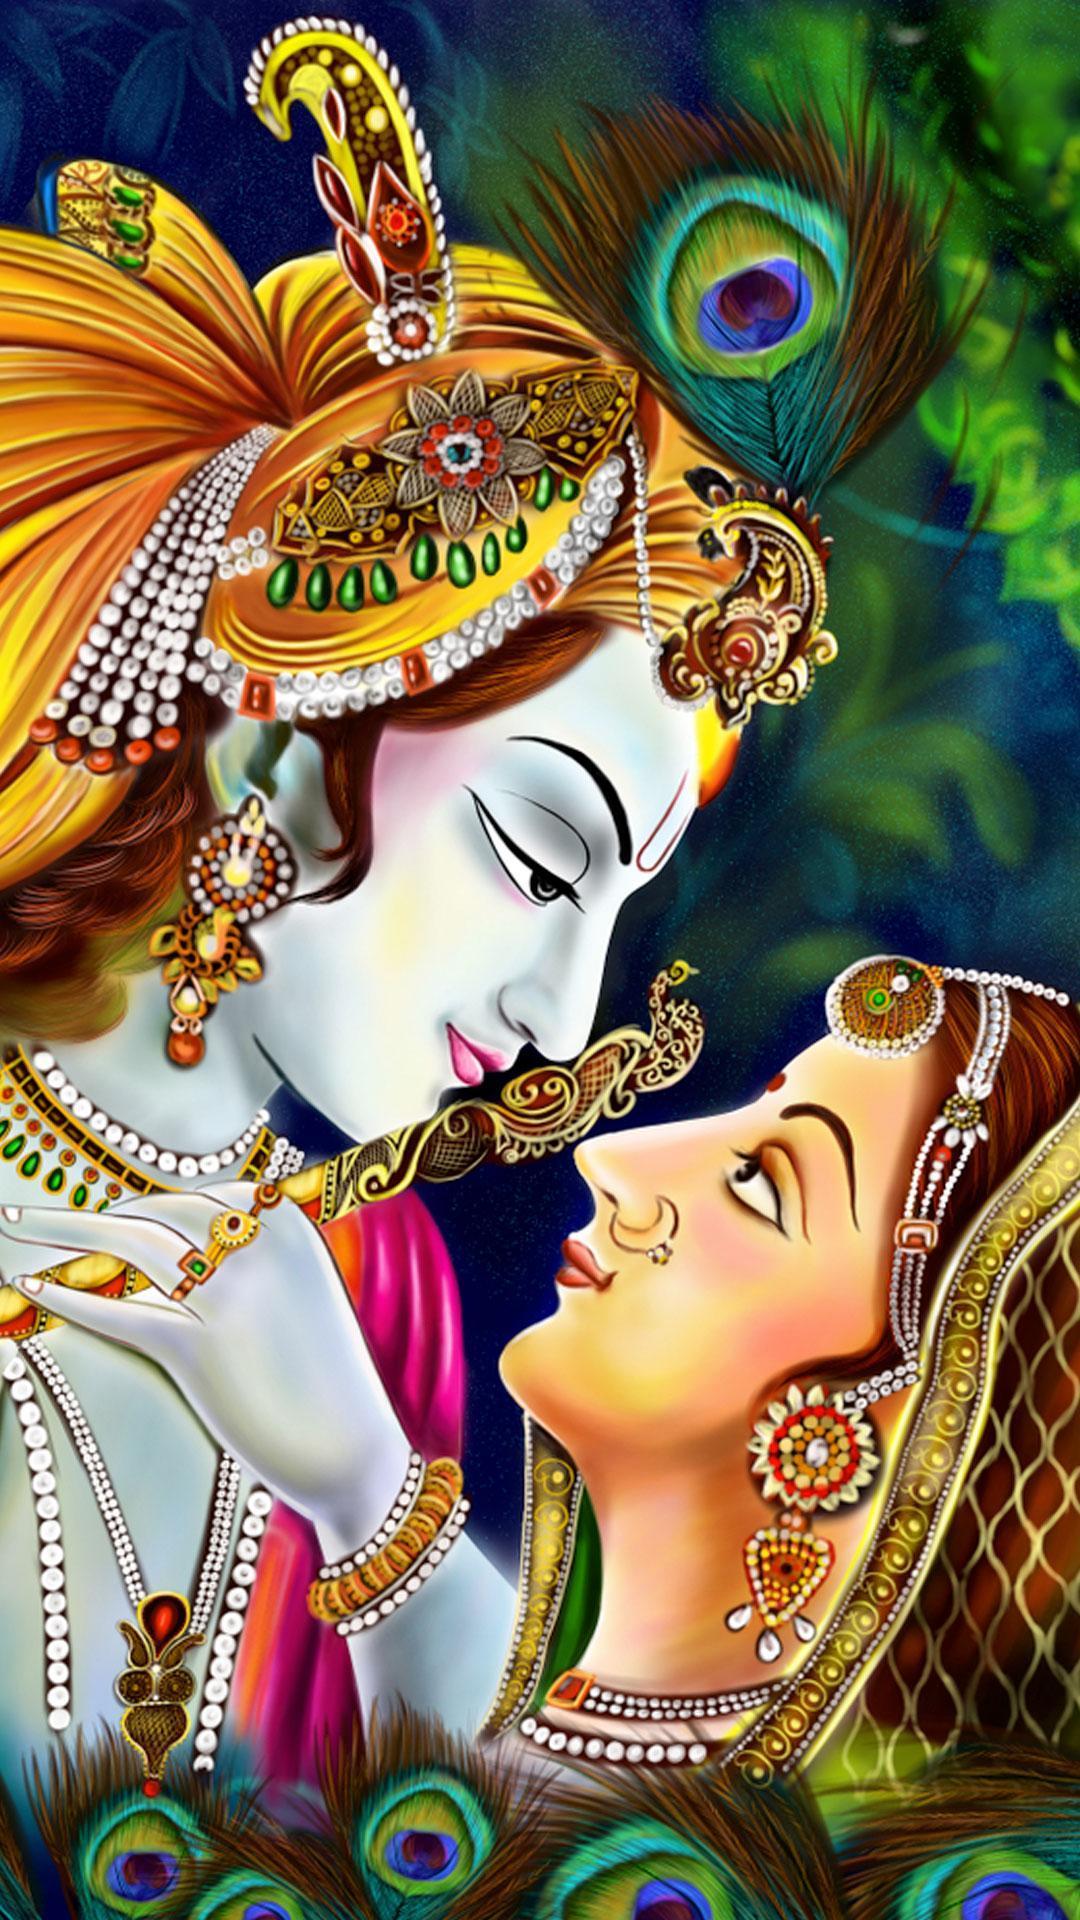 Lord Krishna Wallpaper Gallery | Gallery of God